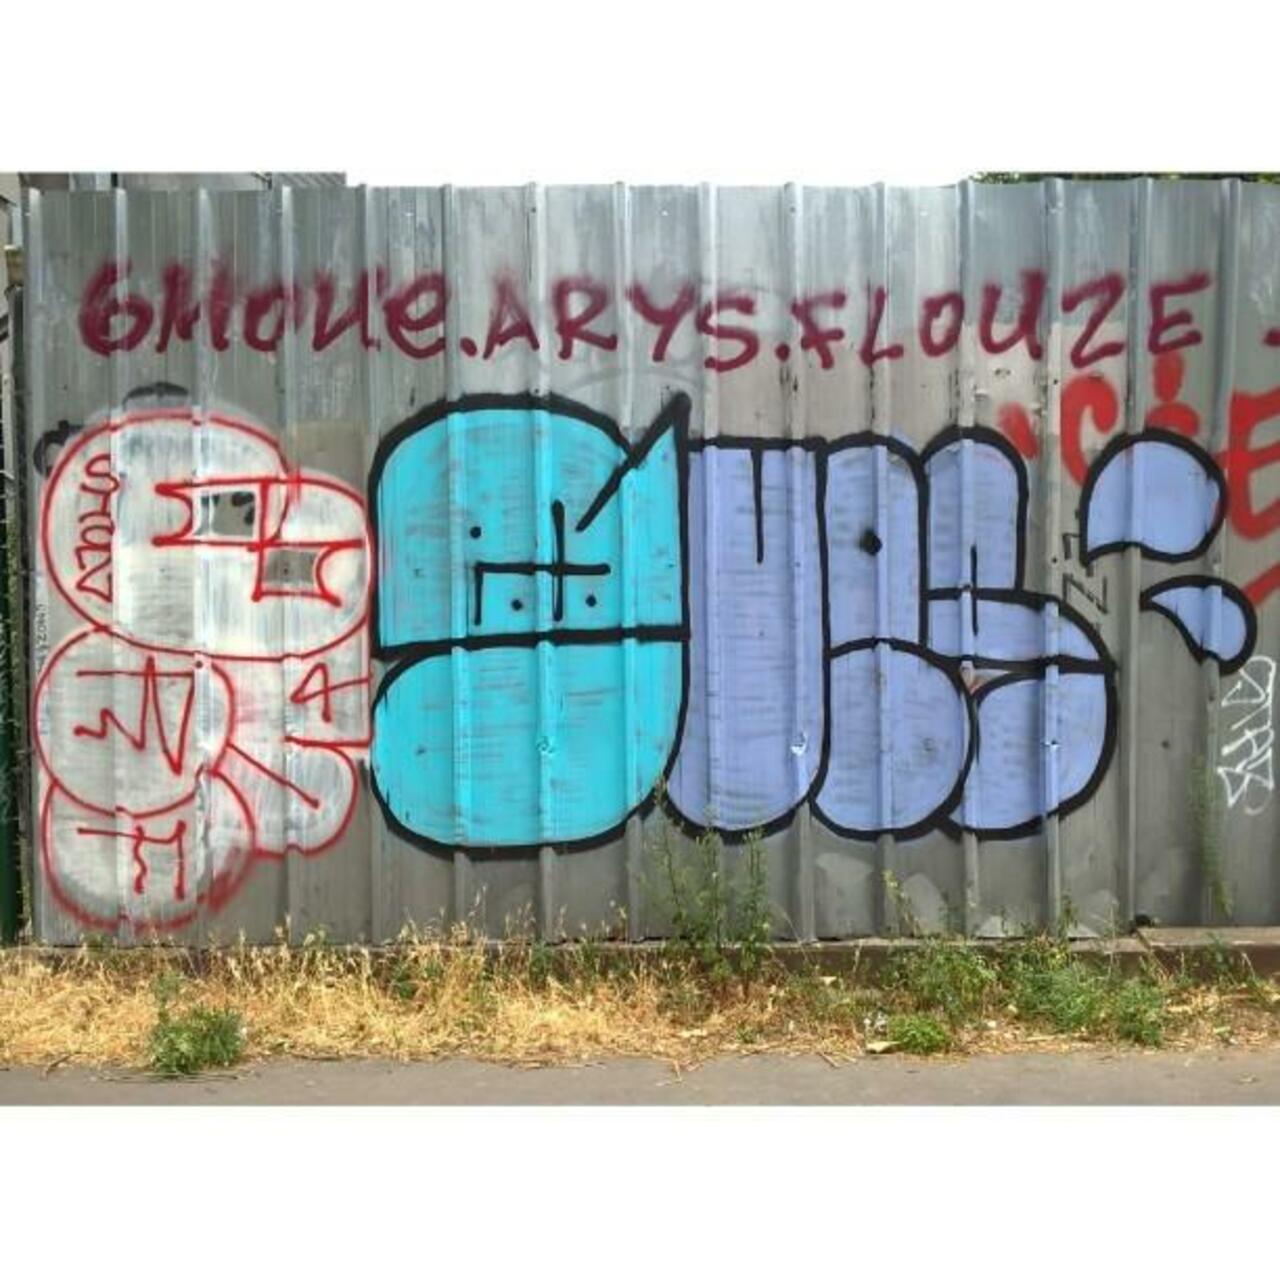 RT @StArtEverywhere: AKBAR GUES
#SDK #WUFC #streetart #graffiti #graff #art #fatcap #bombing #sprayart #spraycanart #wallart #handstyle … http://t.co/pJ3zcxSlWi